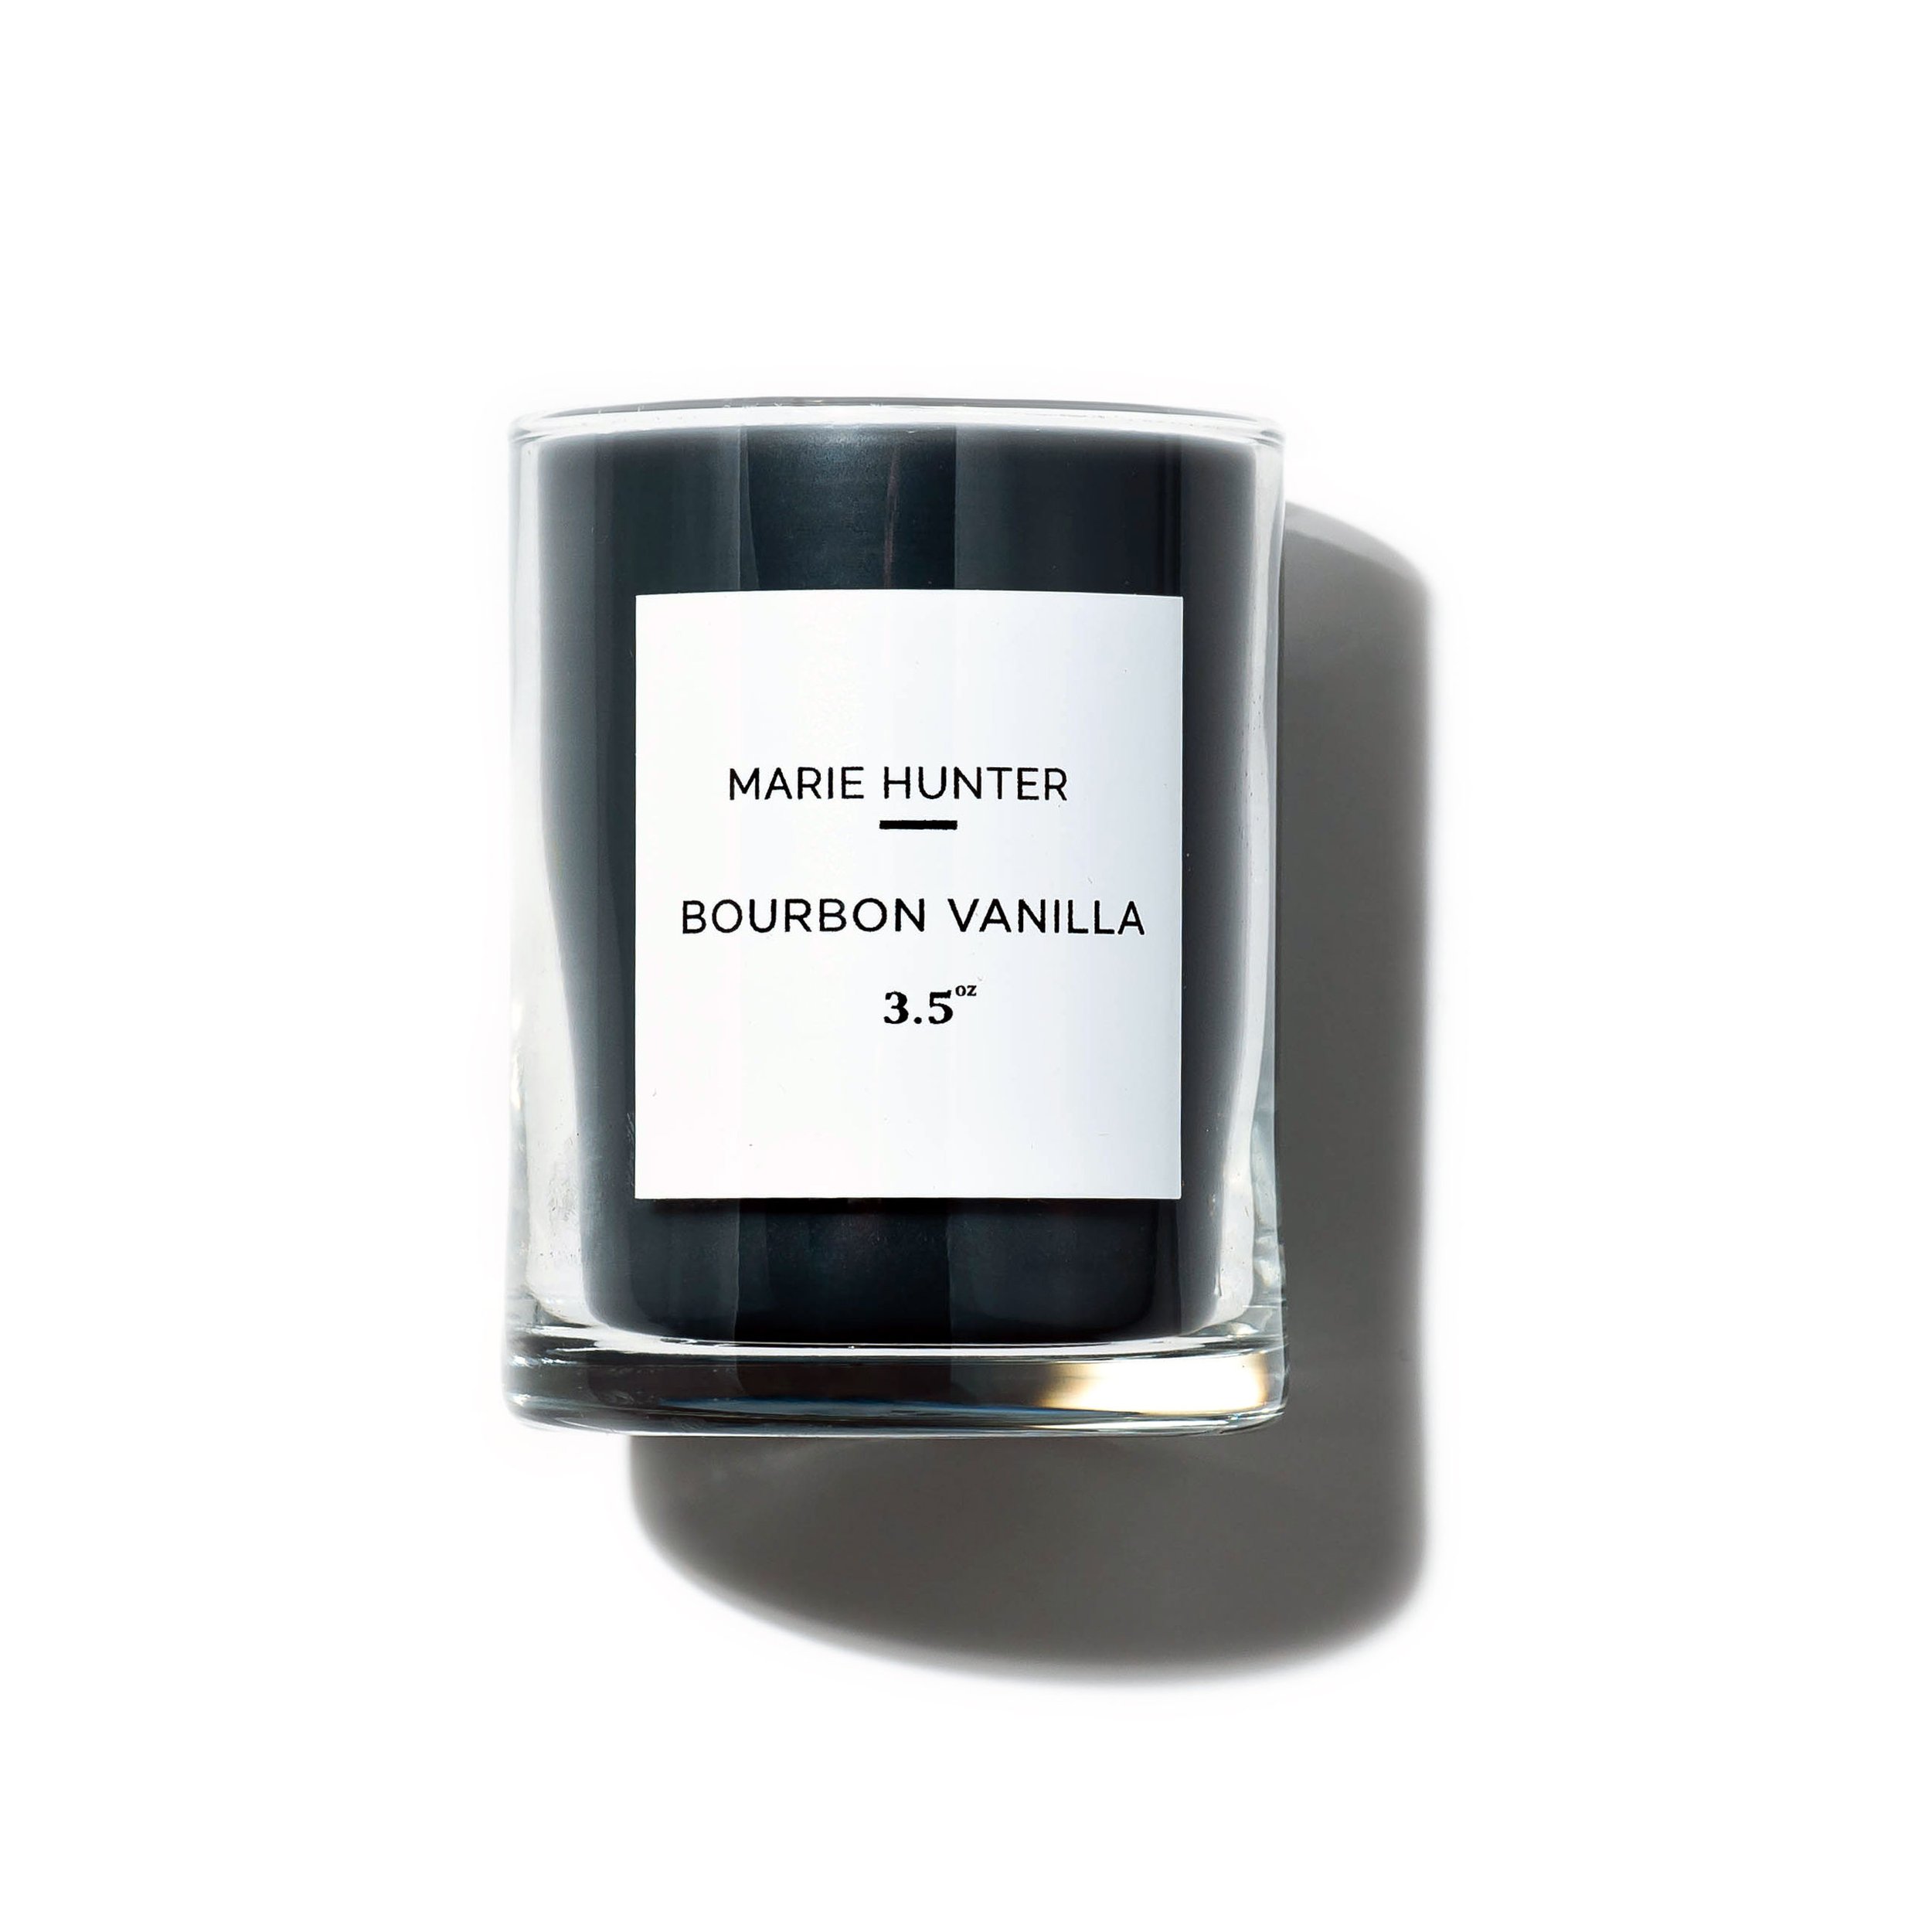 Bourbon Vanilla Signature Candle